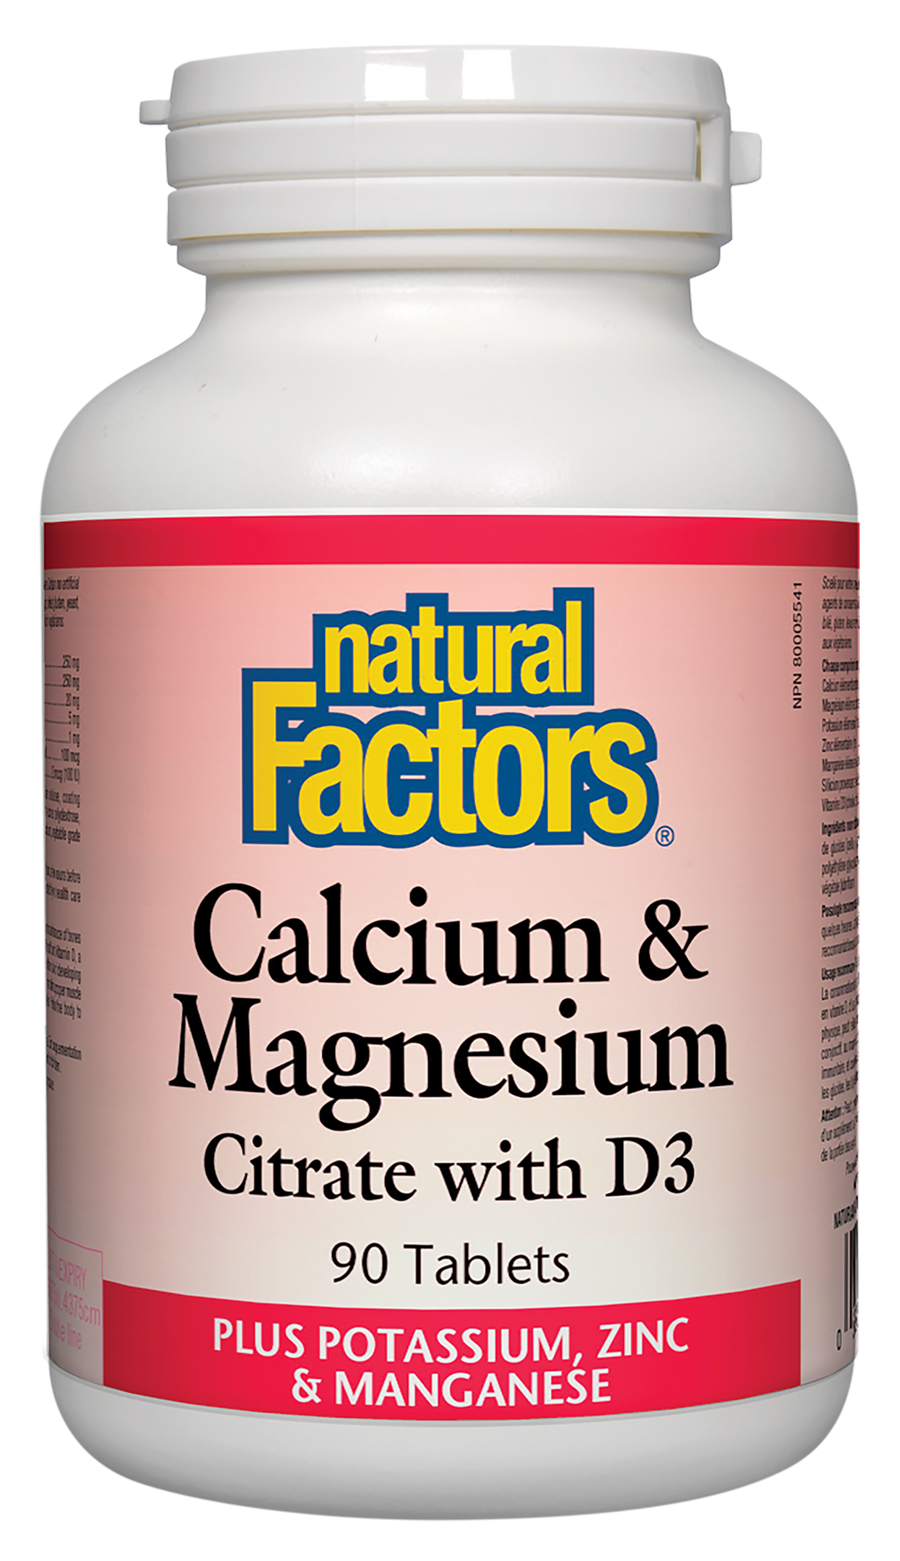 Natural Factors Calcium & Magnesium Citrate with D3 Plus Potassium, Zinc & Manganese Tablets